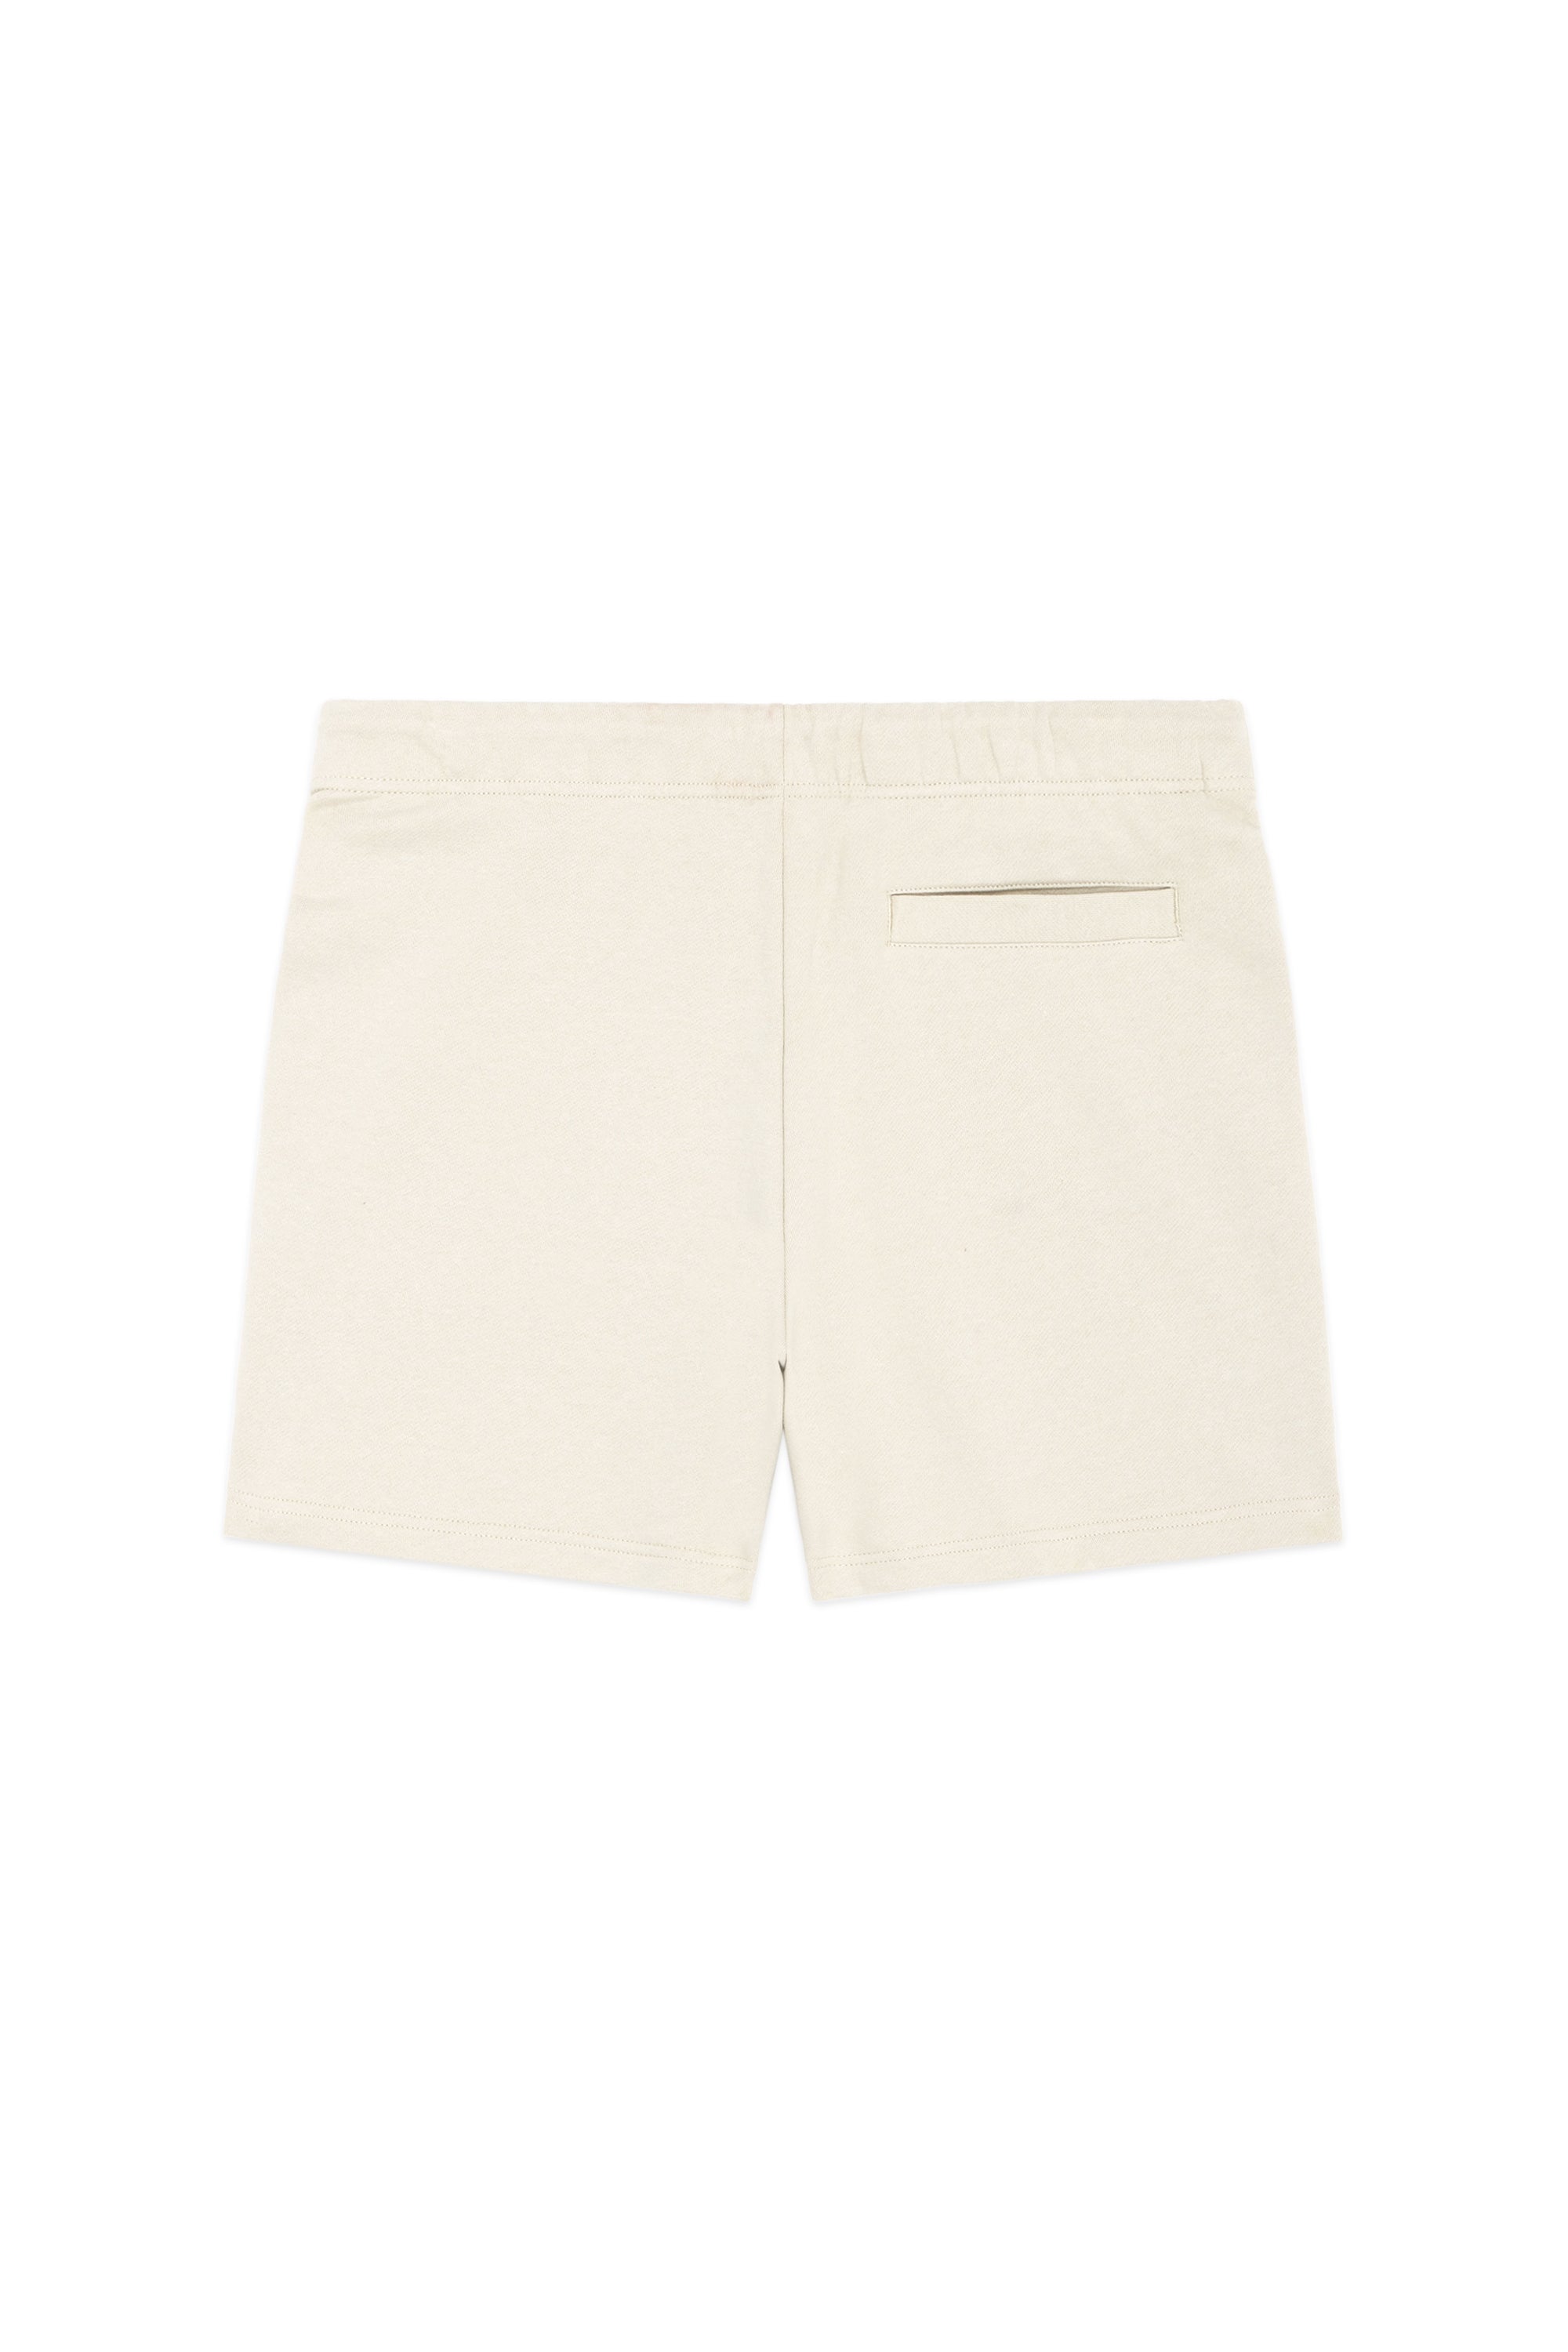 Dsquared2 Kids classic five pockets shorts - White